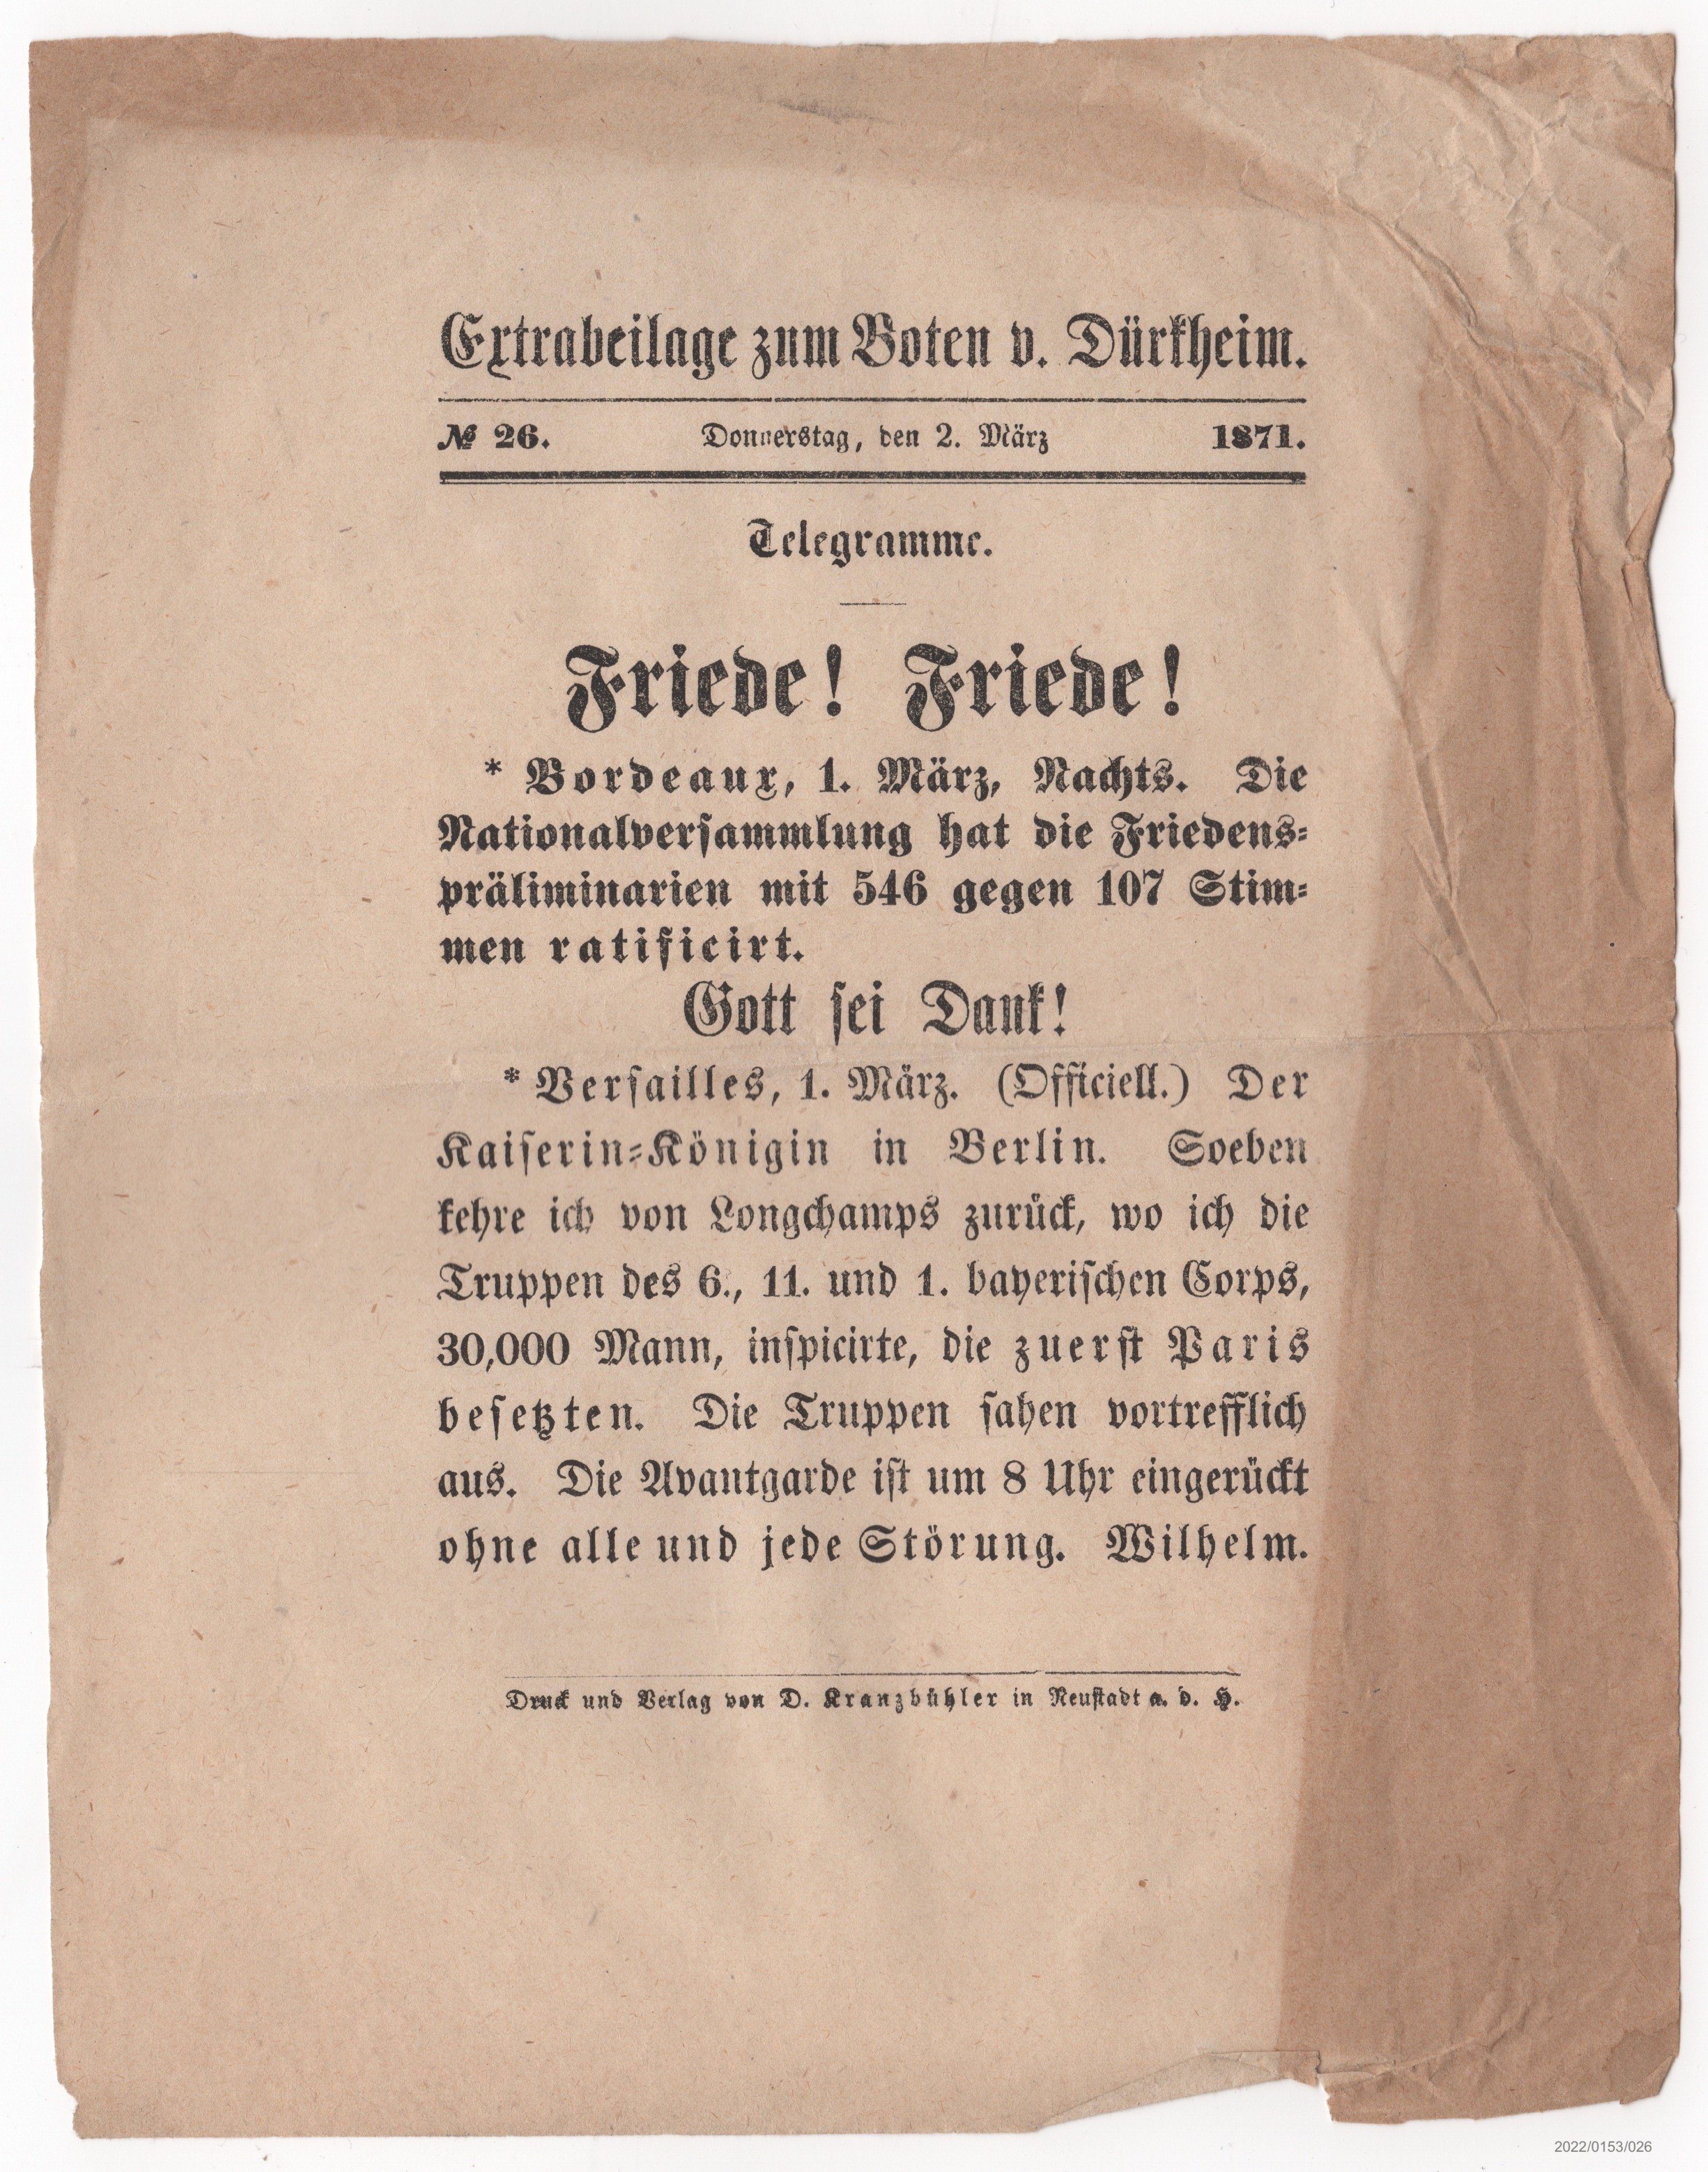 Extrabeilage zum Boten von Dürkheim No 26 02.03.1871 (Museumsgesellschaft Bad Dürkheim e. V. CC BY-NC-SA)